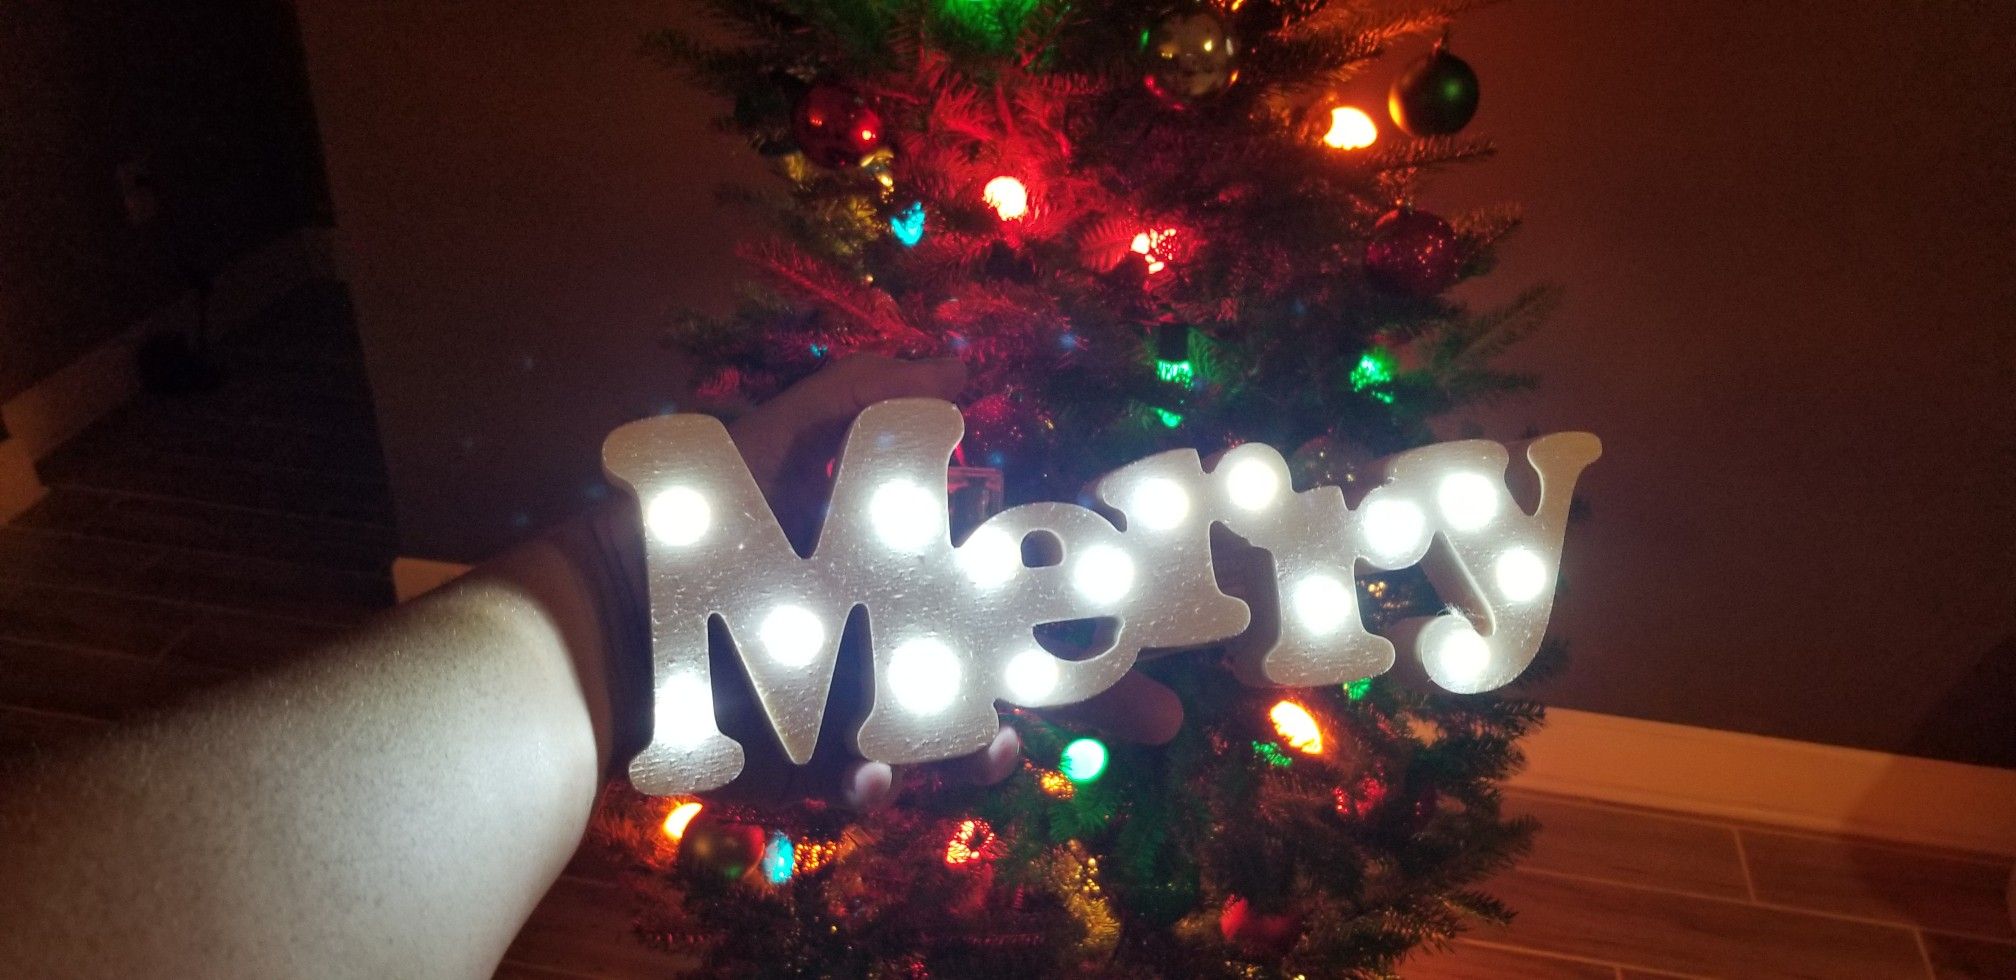 Christmas Light - "Merry" - New